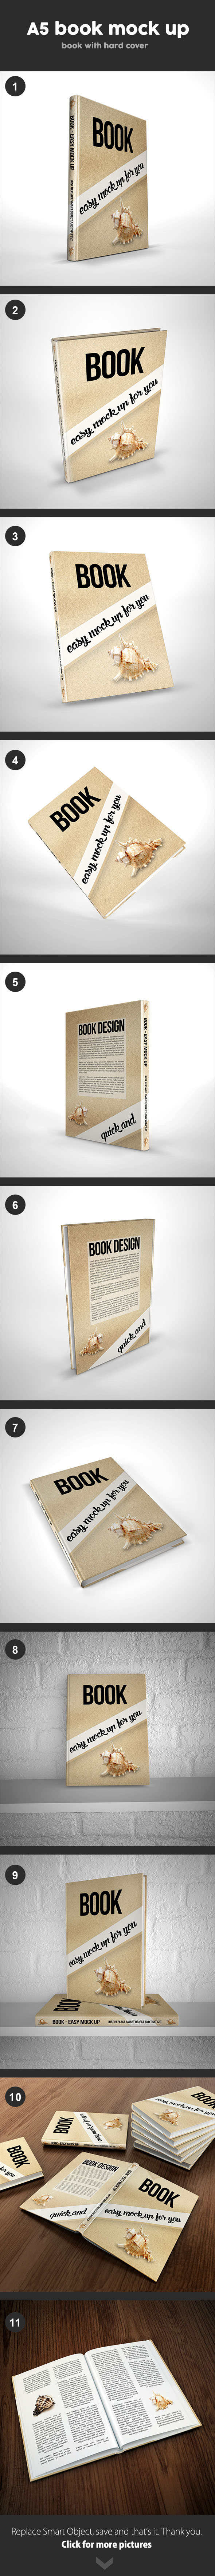 3D a5 book book cover mock up mock-up book mockup cover design Mockup